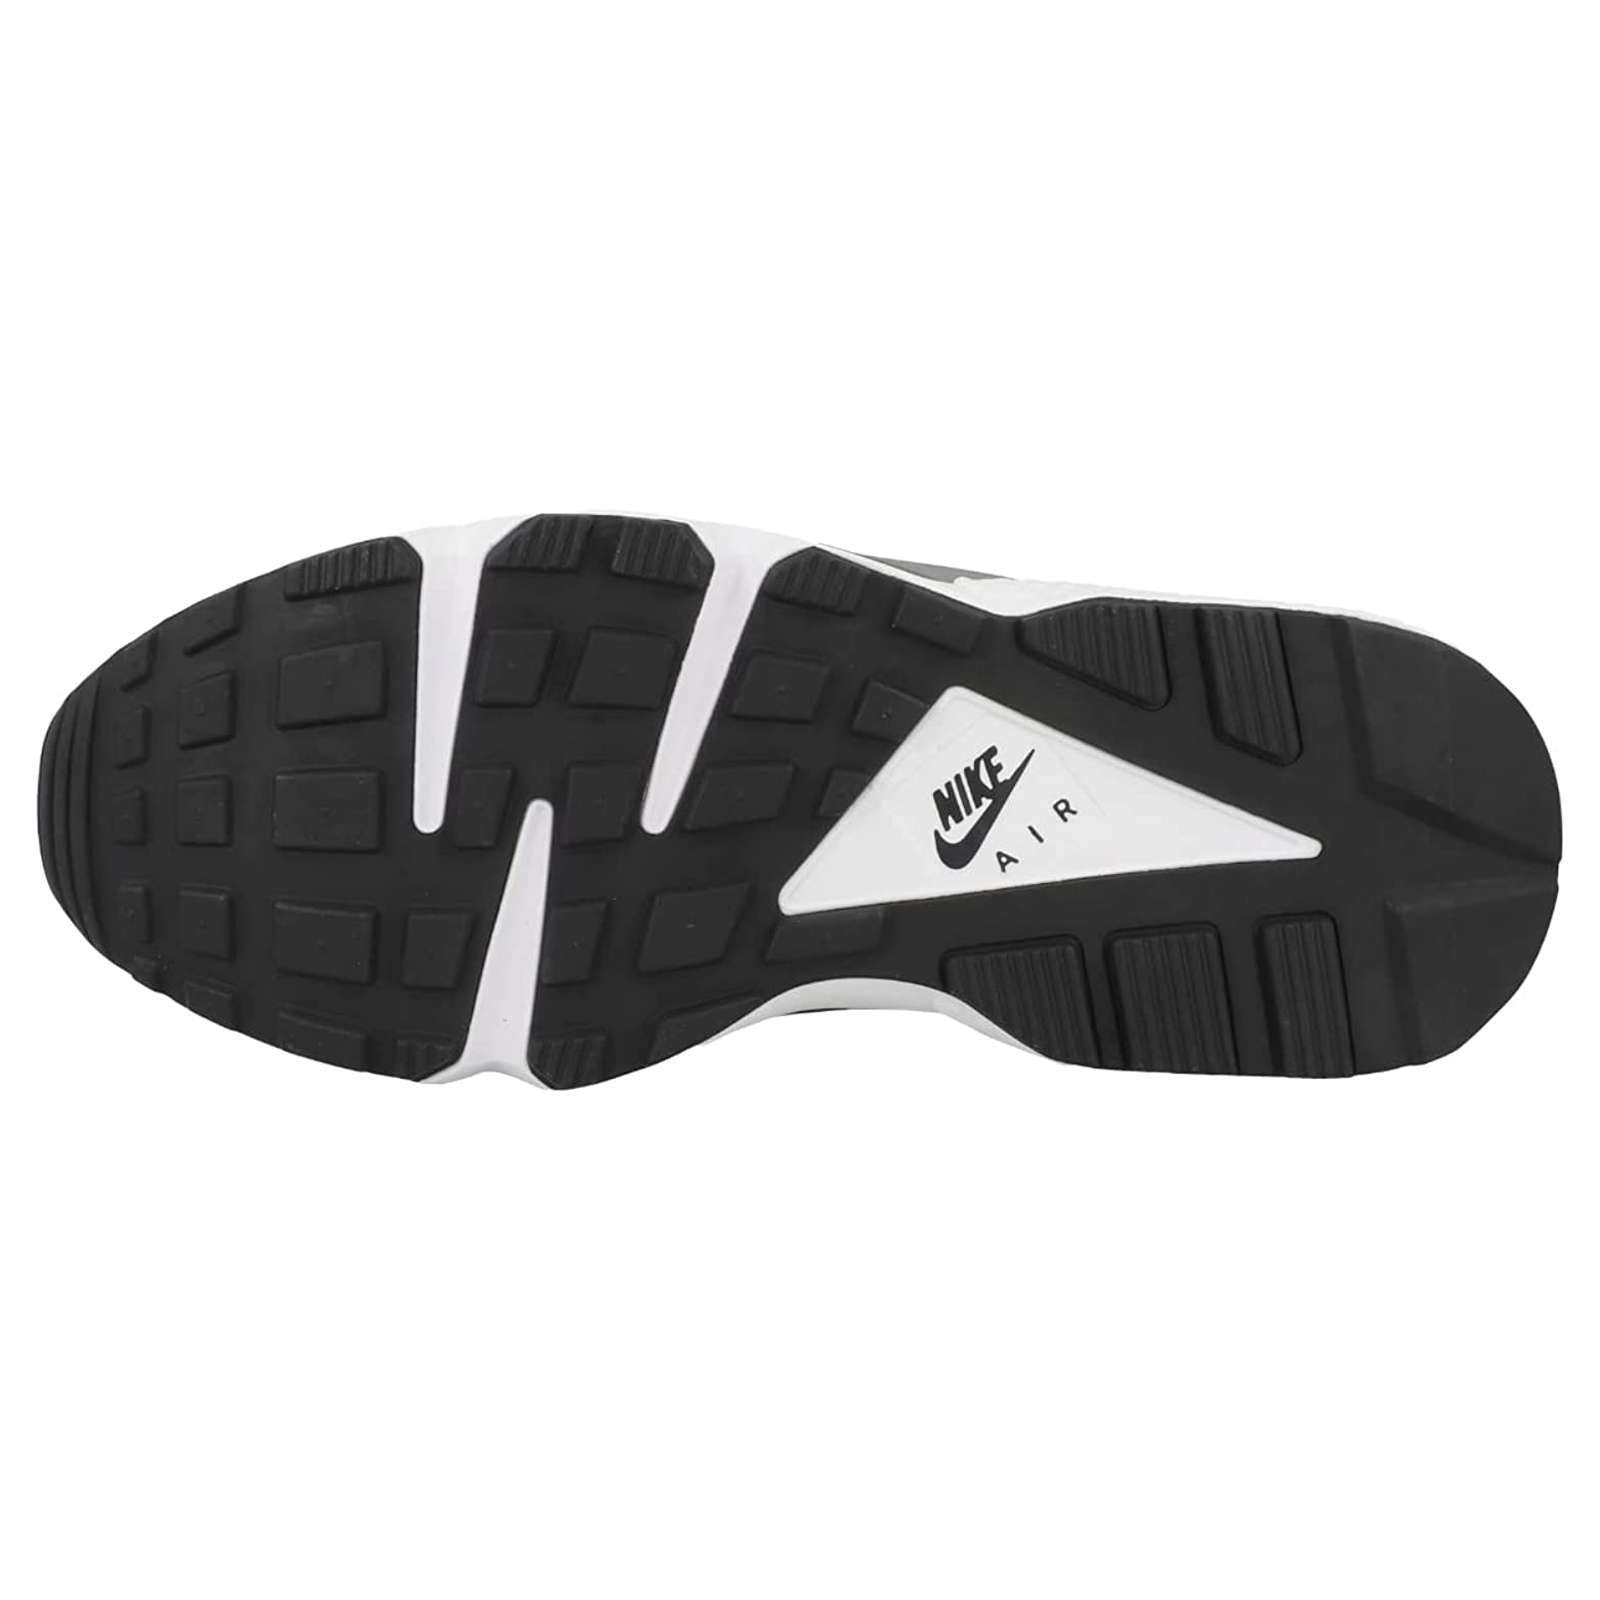 Nike Air Huarache J22 Synthetic Textile Unisex Low-Top Sneakers#color_black marina smoke grey white